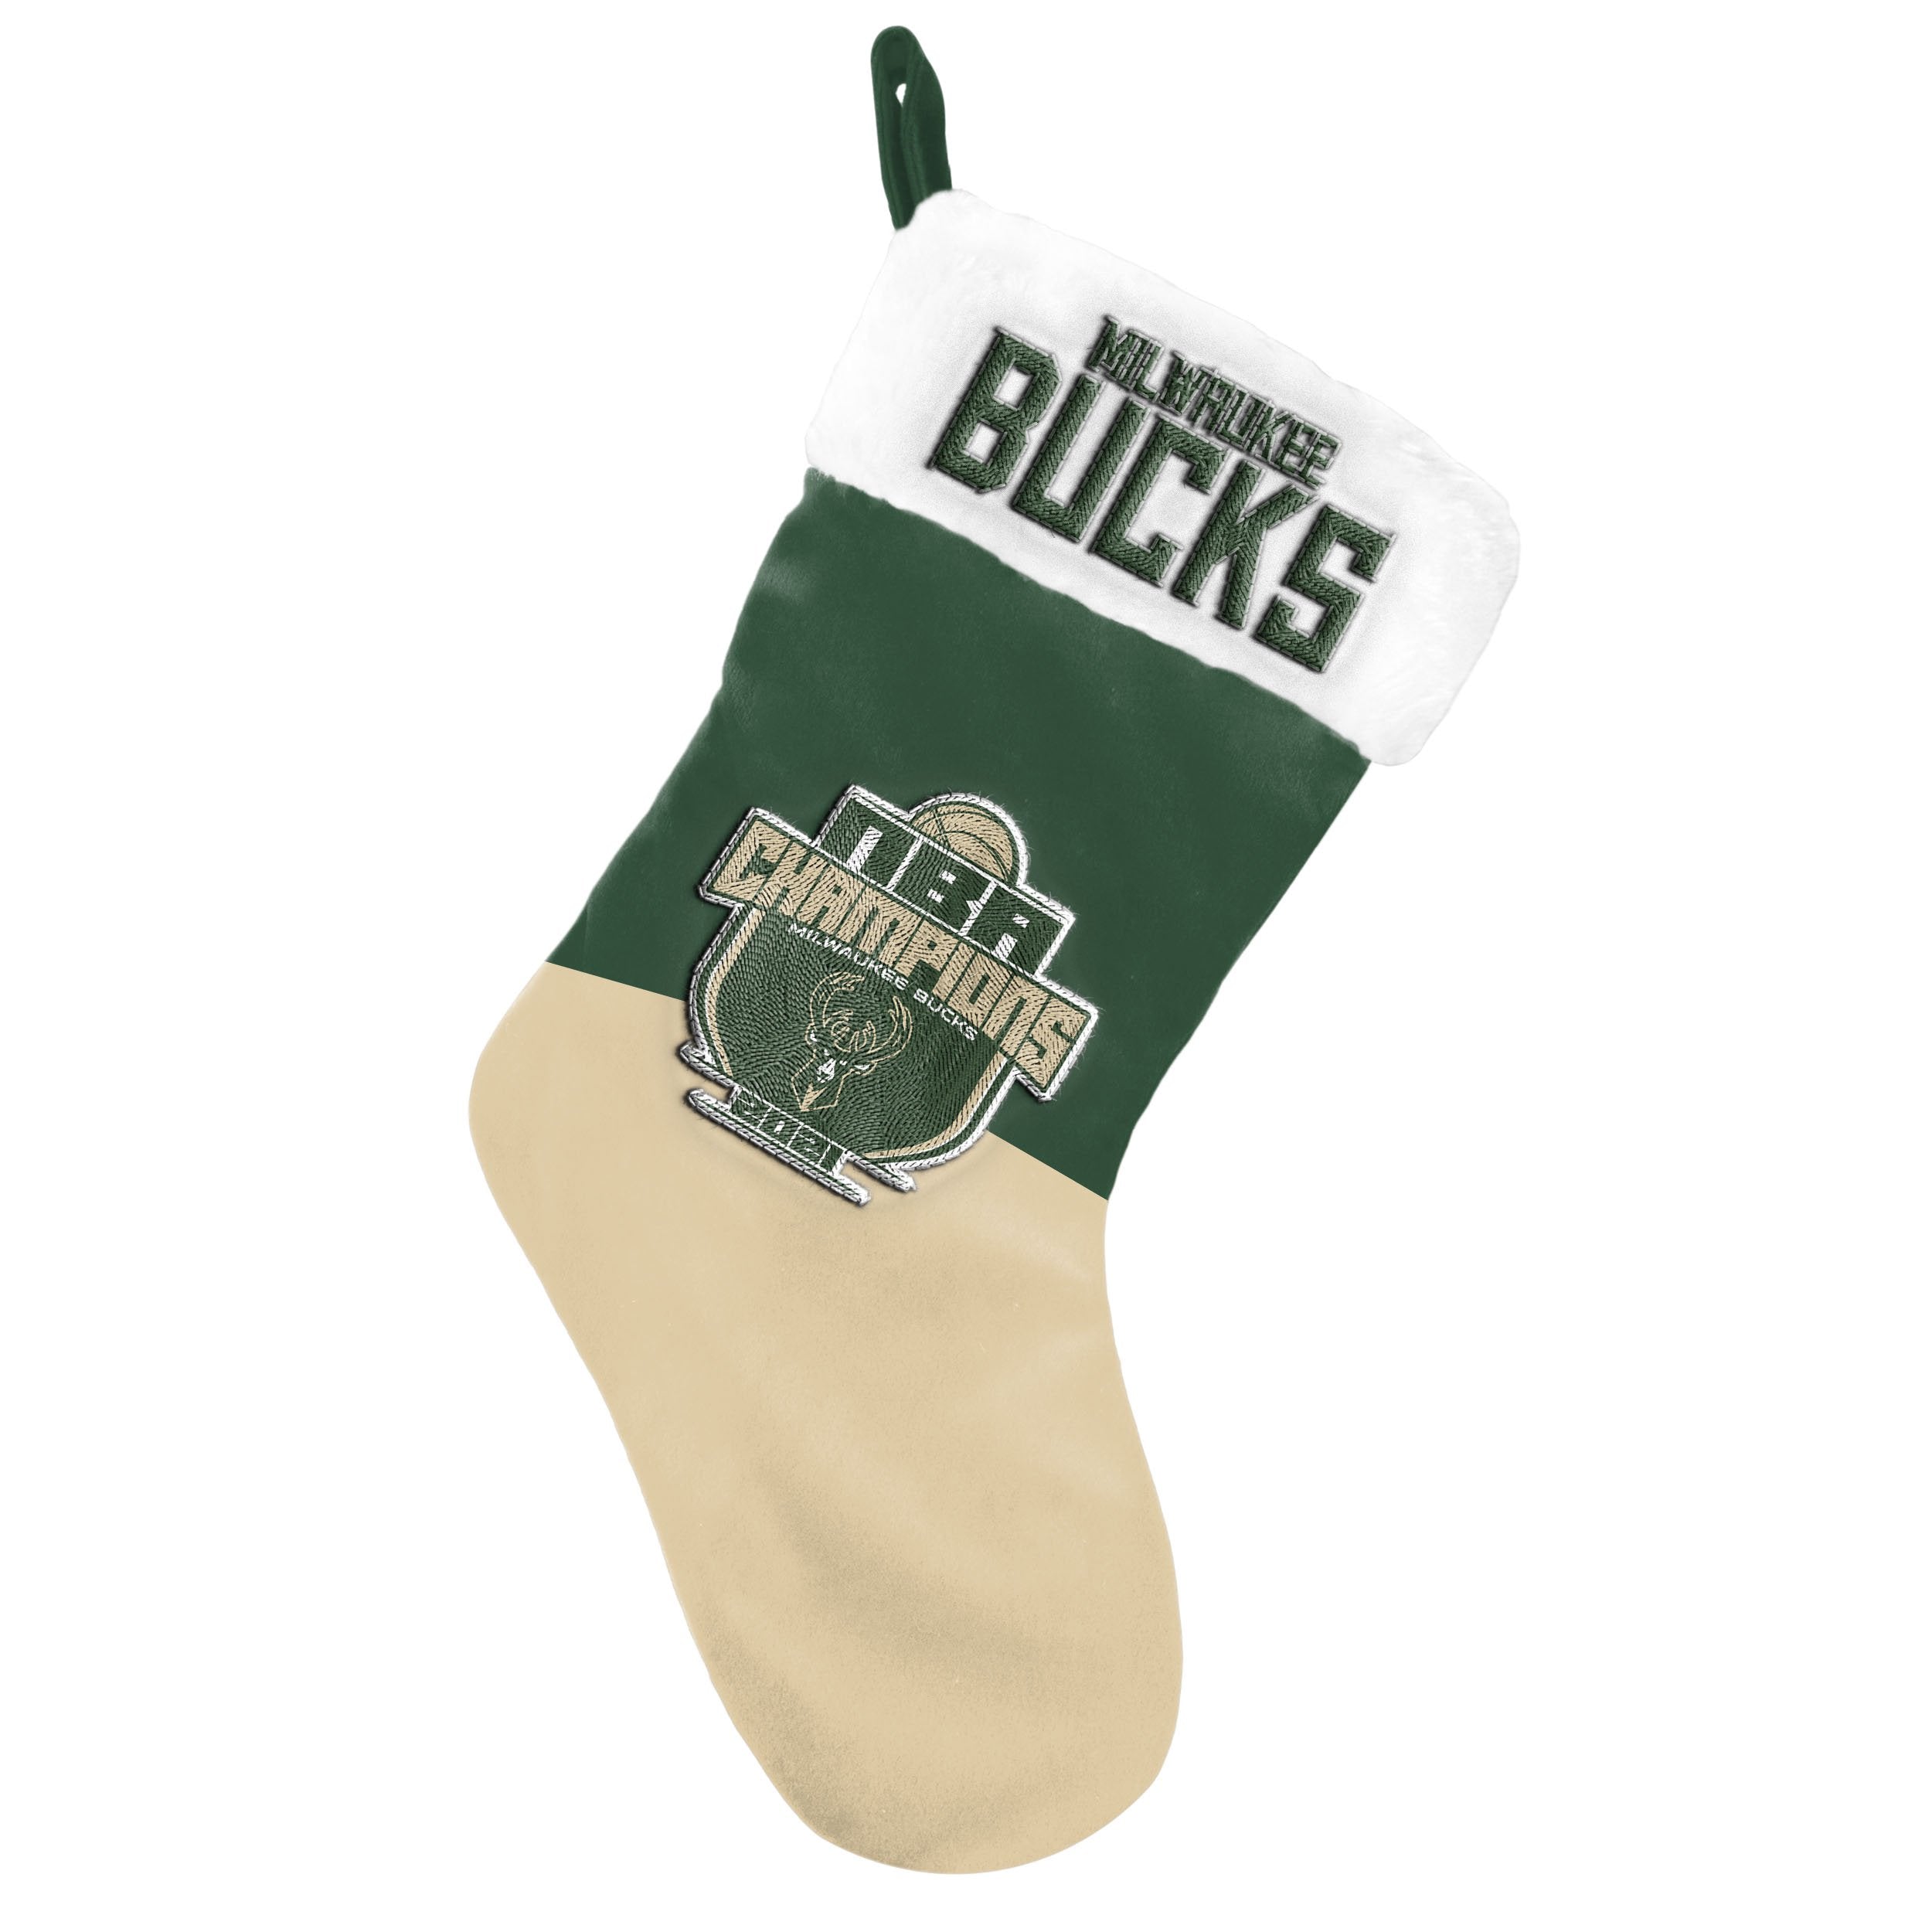 Milwaukee Bucks 2021 NBA Champions official merchandise, buy now